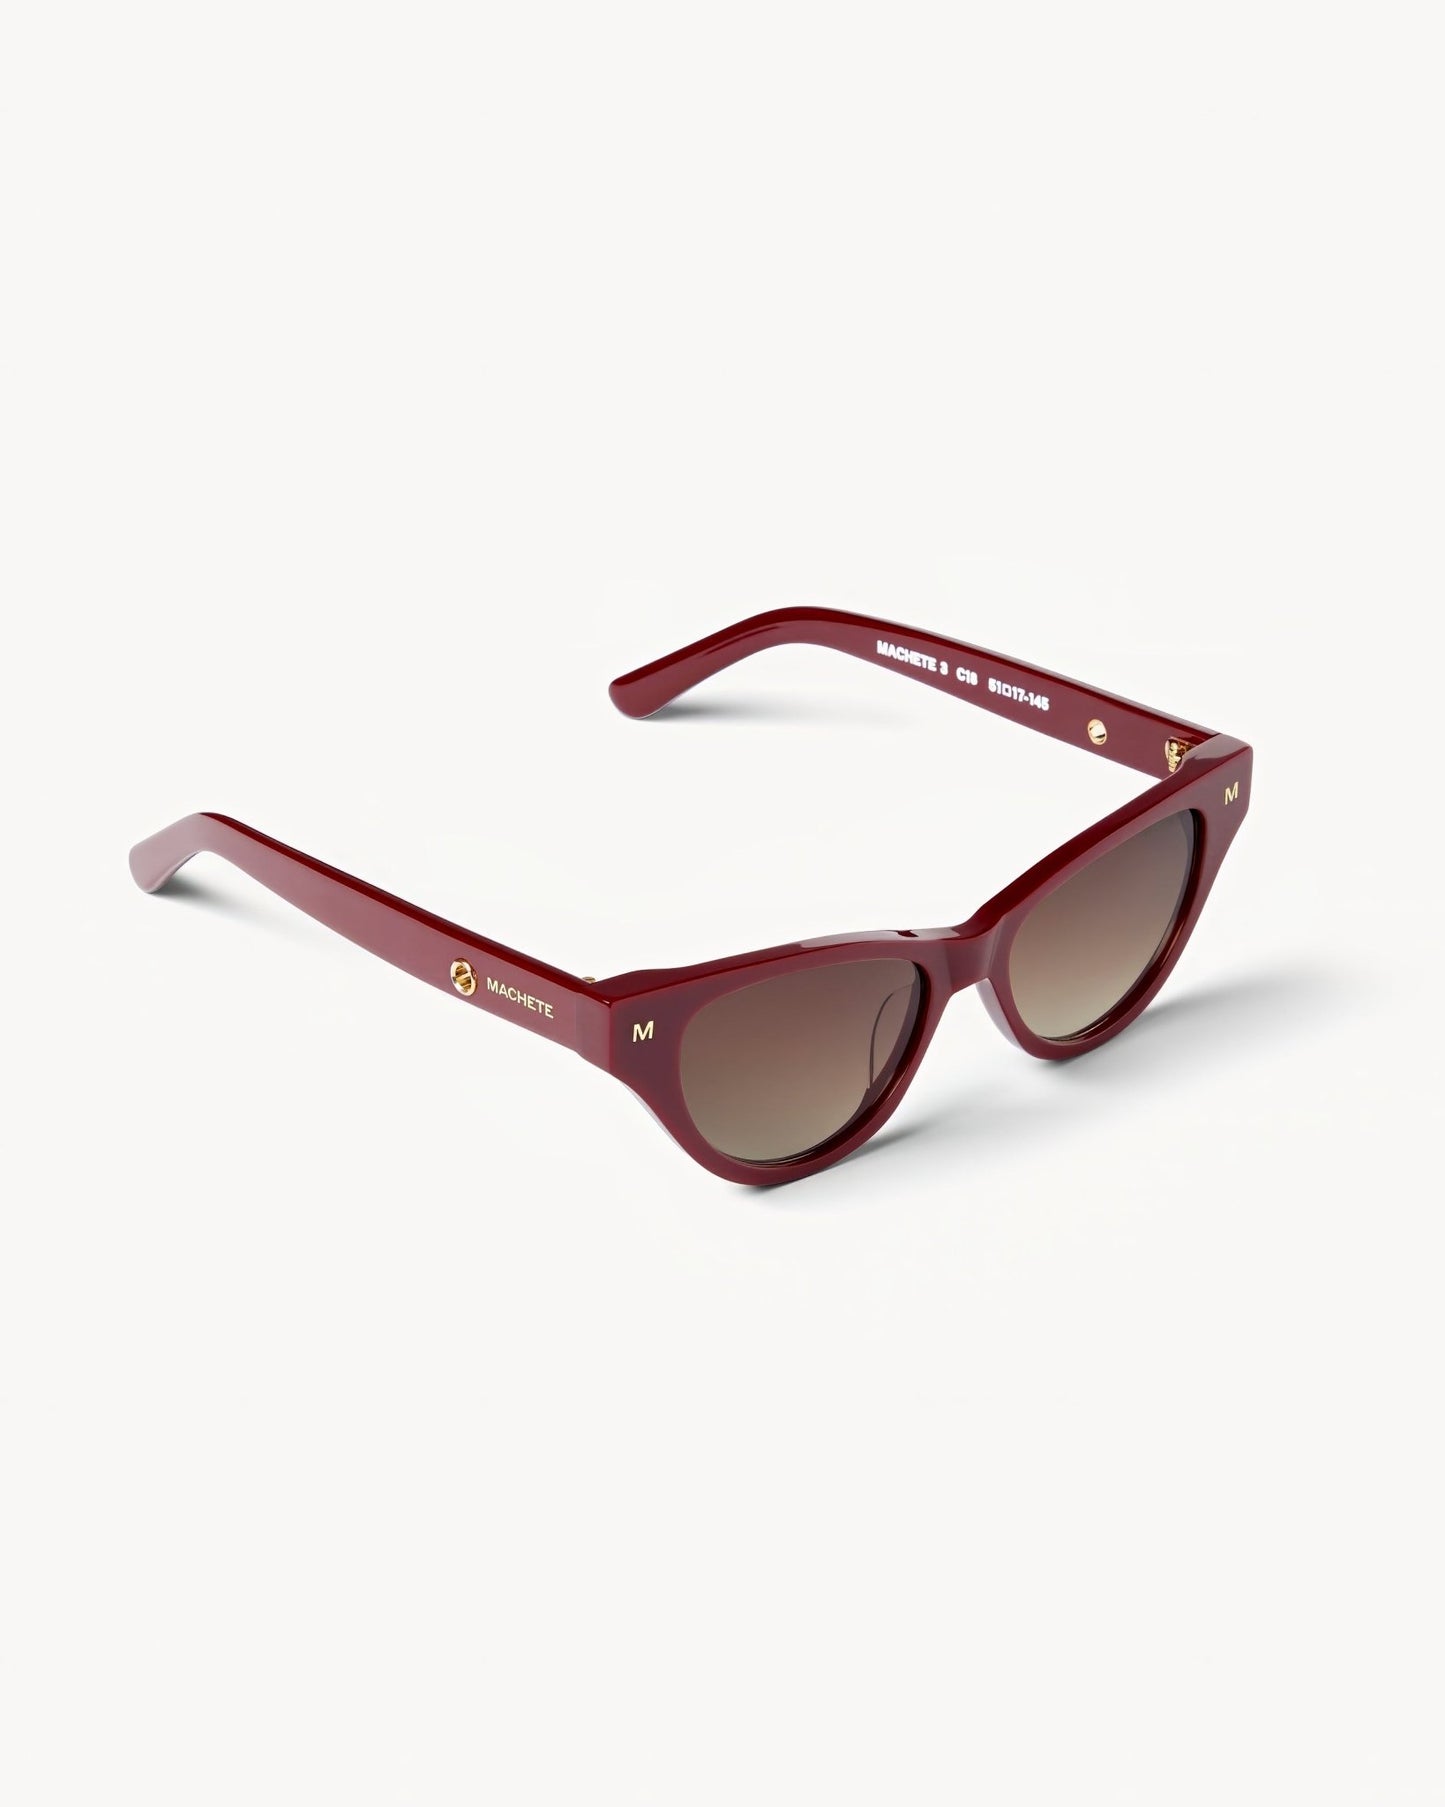 Suzy Sunglasses in Oxblood - MACHETE